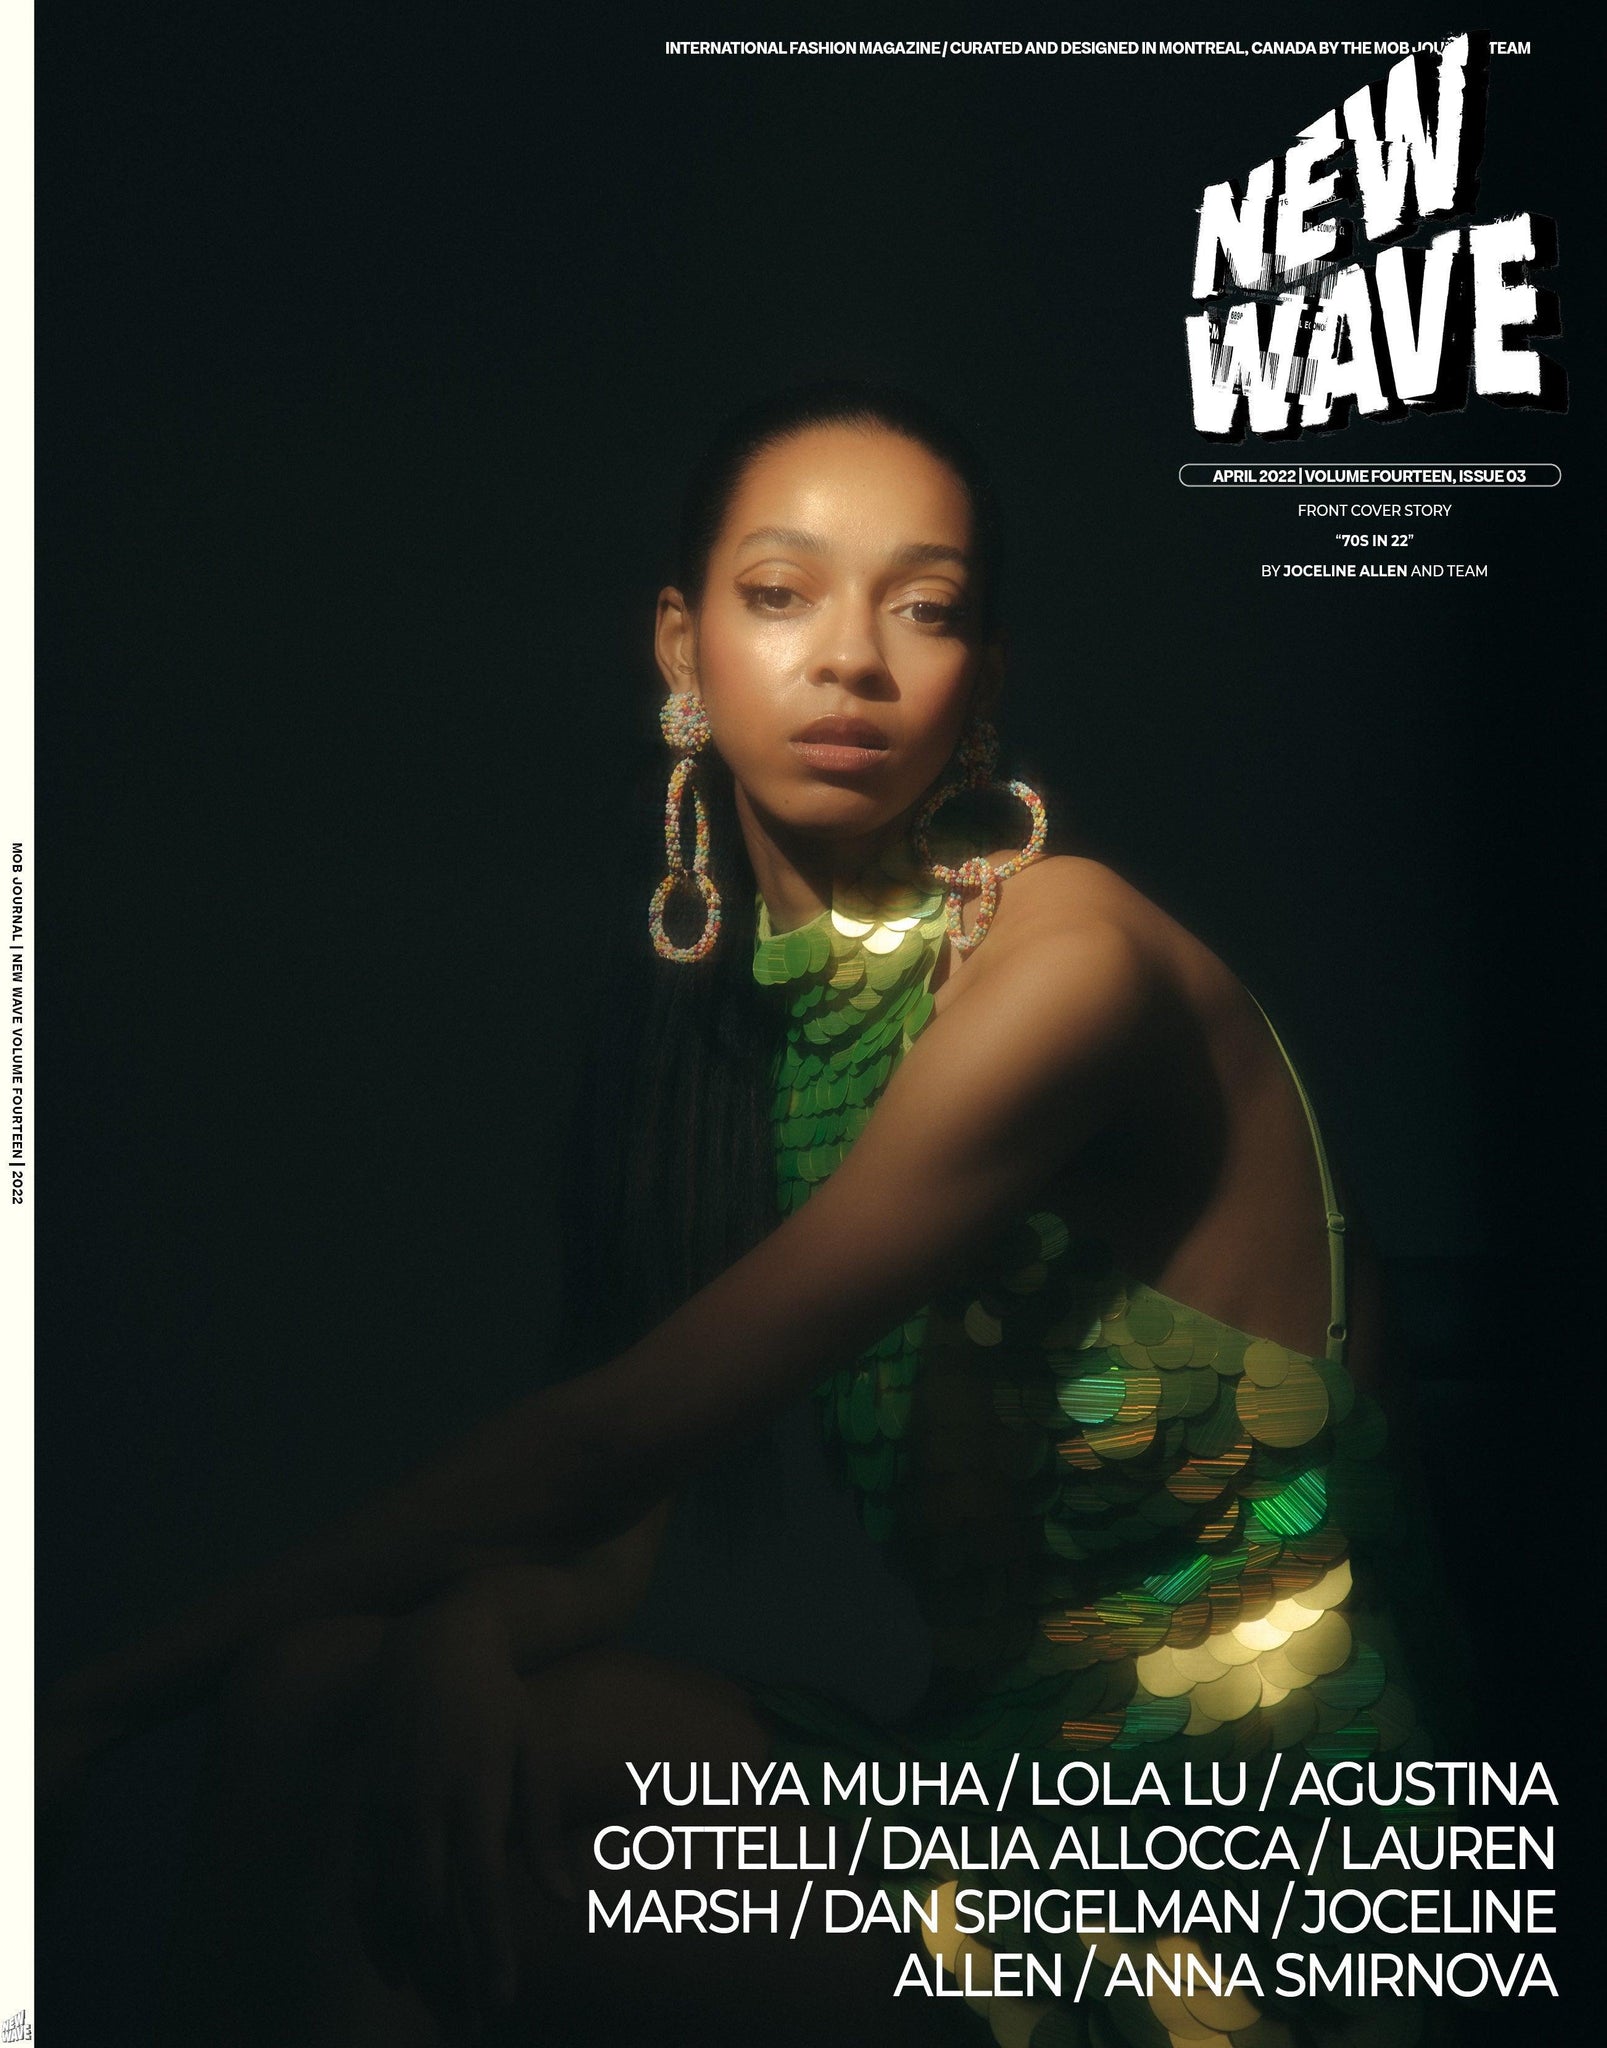 NEW WAVE | VOLUME FOURTEEN | ISSUE #03 - Mob Journal